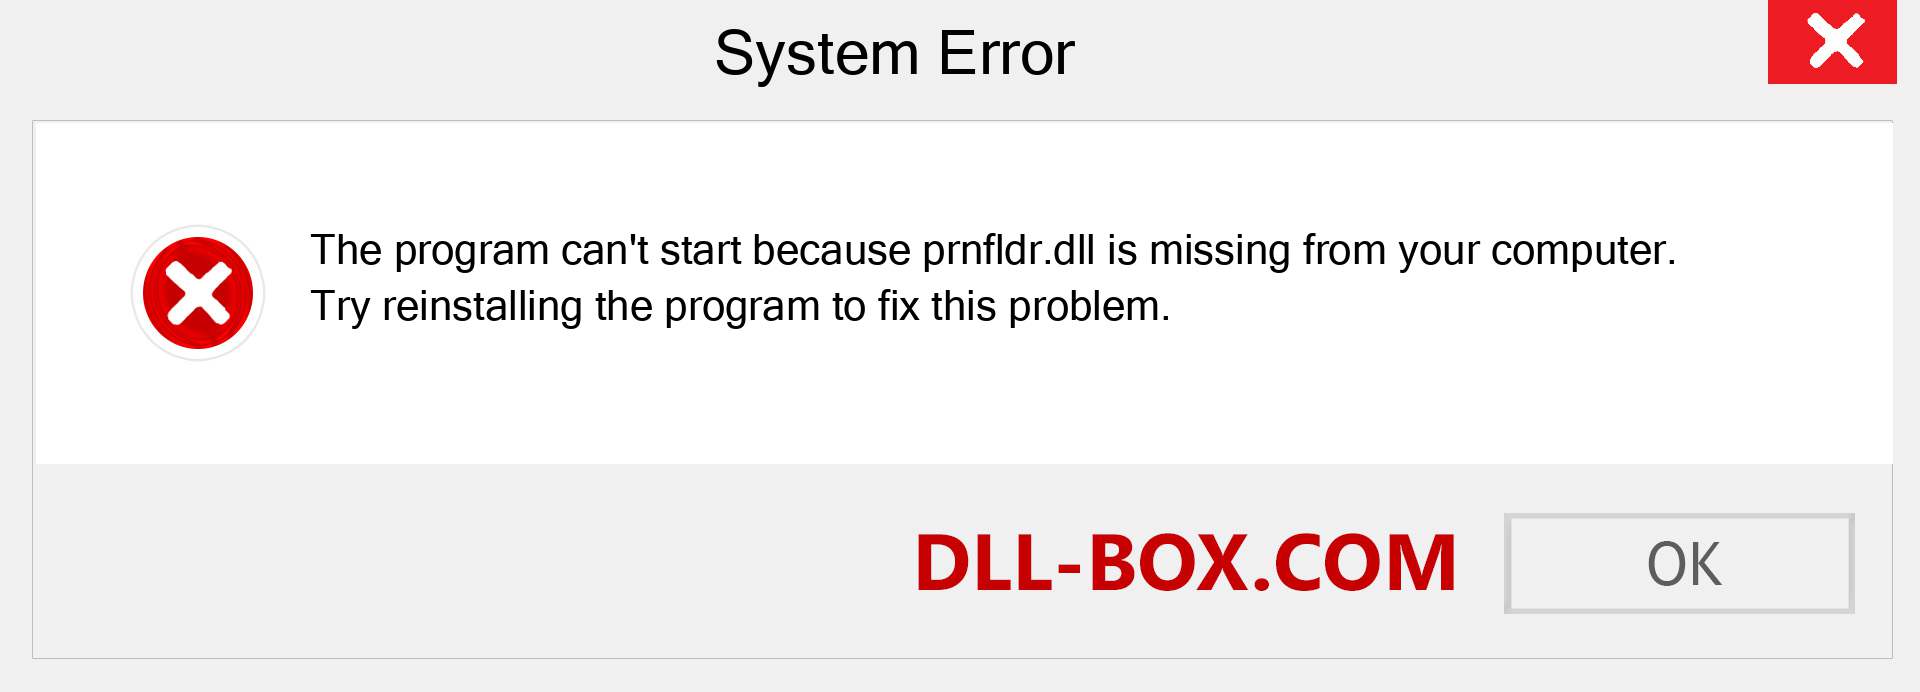  prnfldr.dll file is missing?. Download for Windows 7, 8, 10 - Fix  prnfldr dll Missing Error on Windows, photos, images